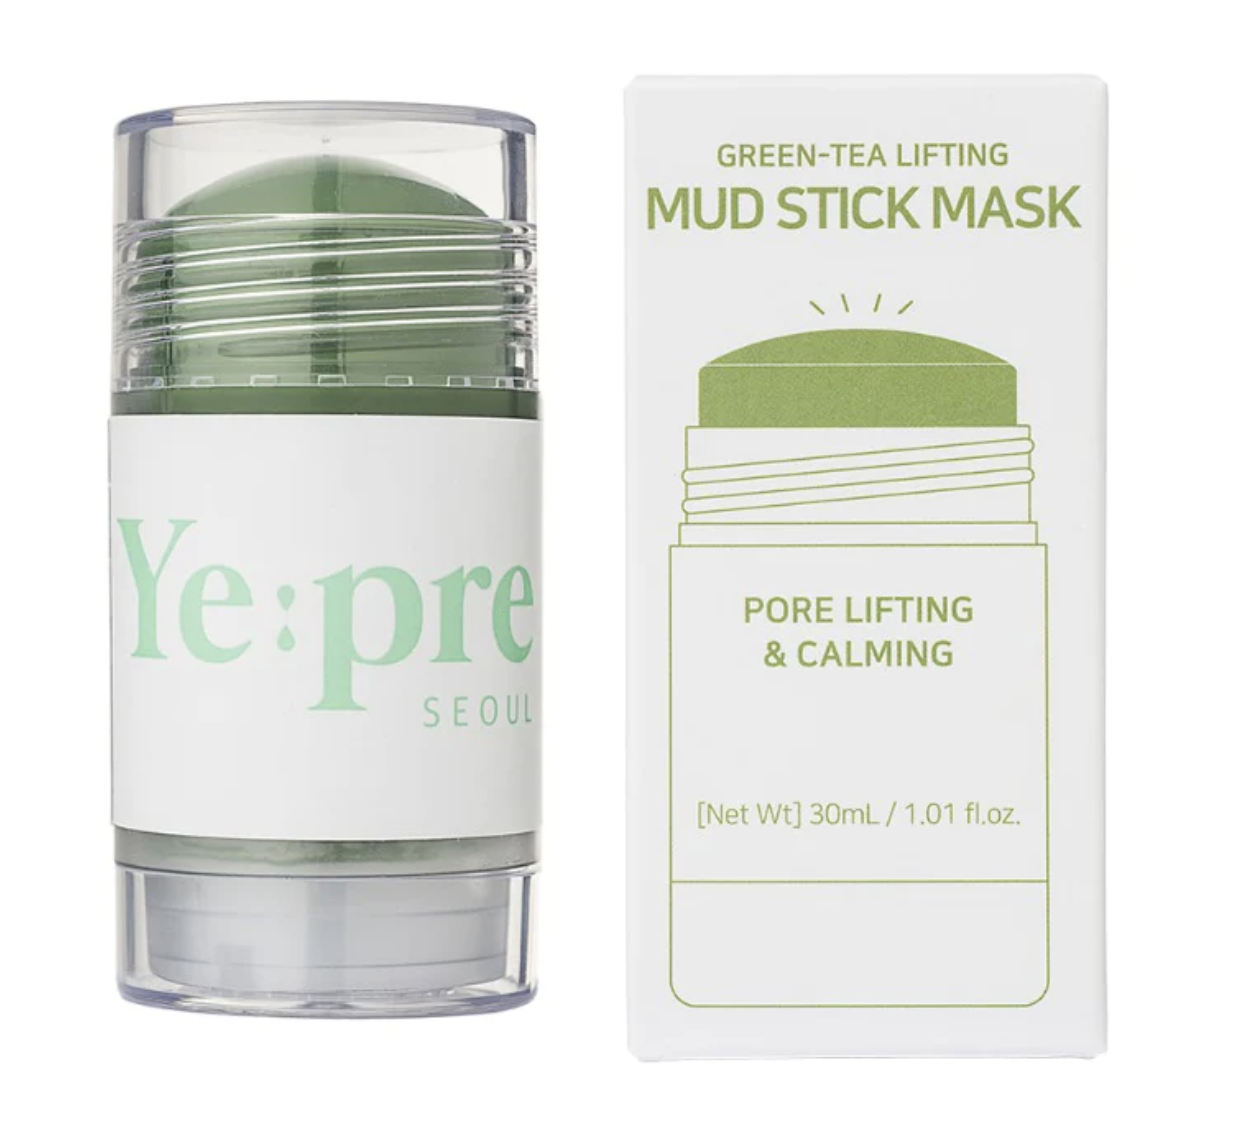 Ye:Pre Mud Stick Mask Green-Tea Lifting